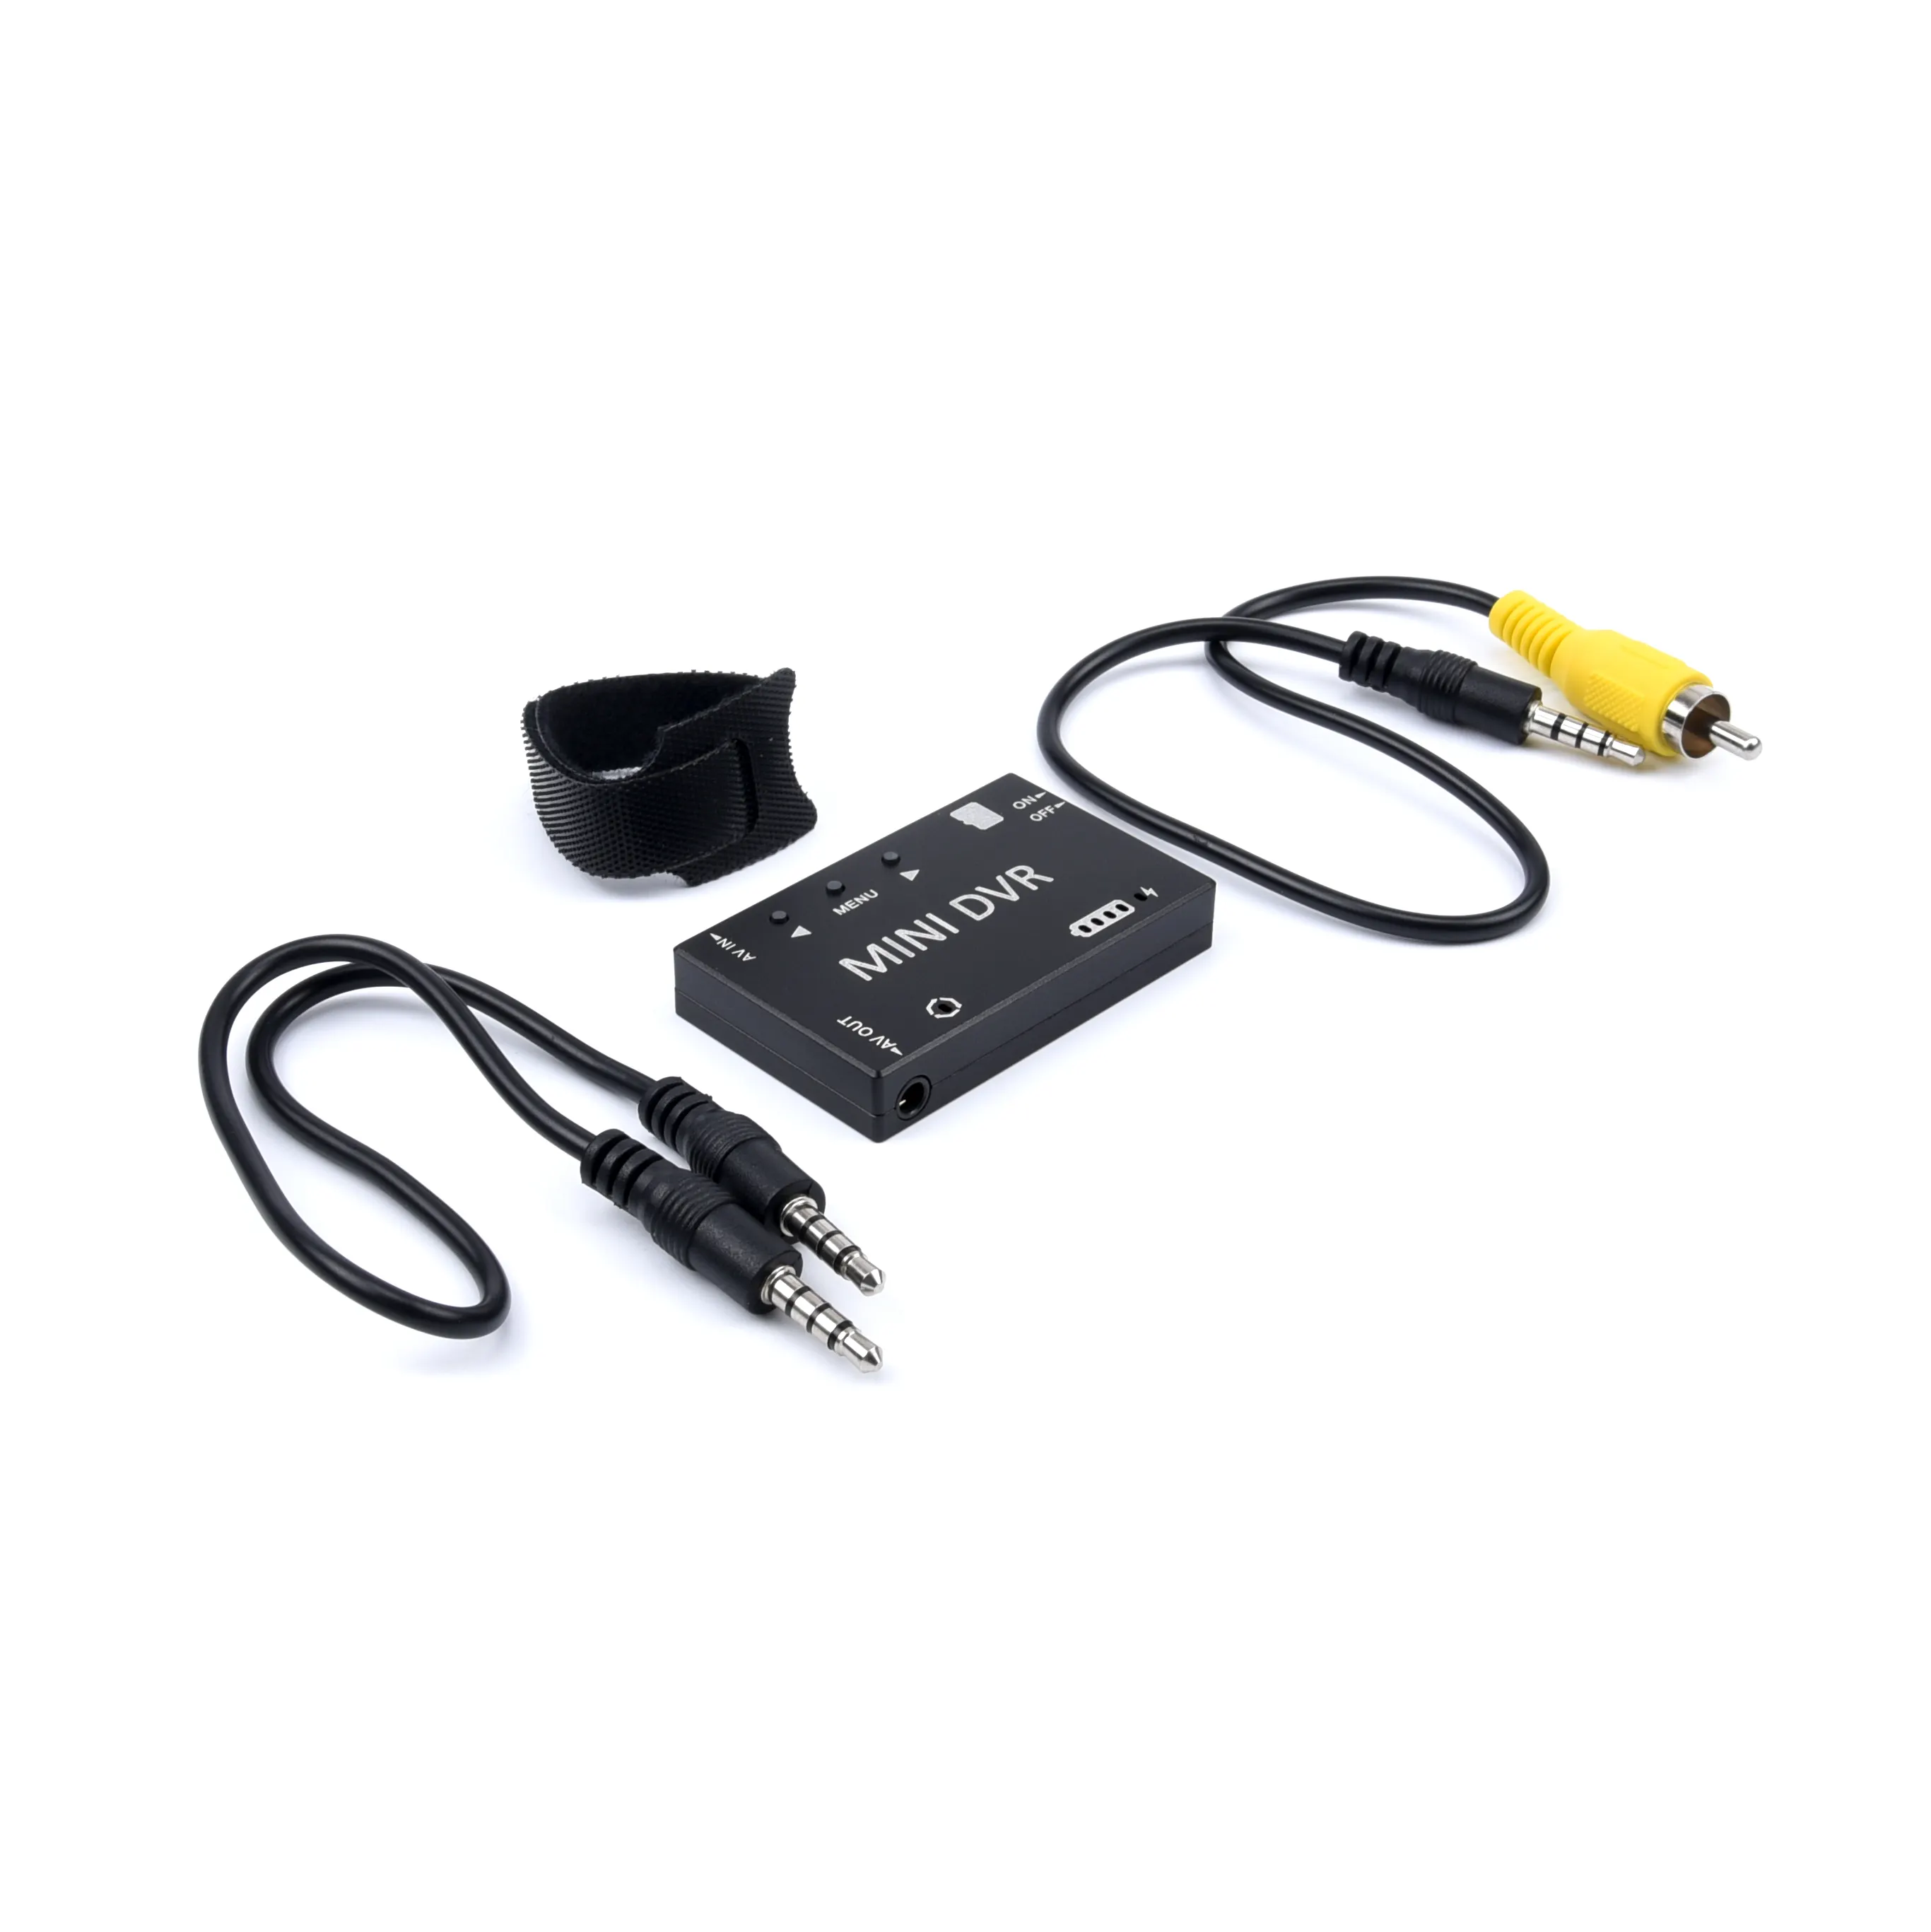 Mini Dvr Video Audio Recorder Fpv Recorder Ingebouwde 3.7V 400Mah Batterij Ntsc/Pal Schakelbaar Voor rc Fpv Multicopters Vr Goggle